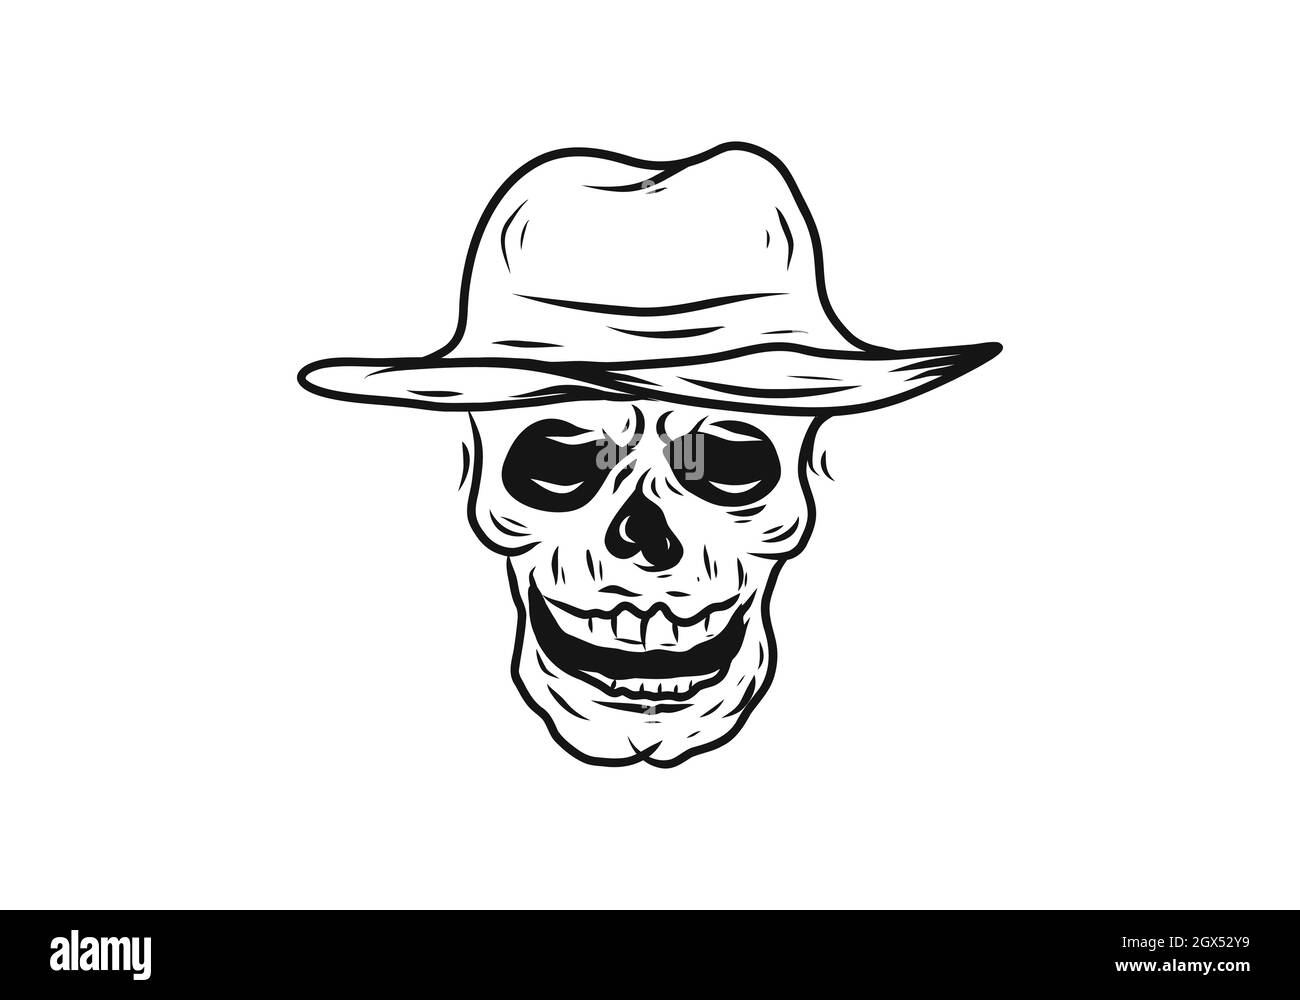 Black line art drawing of skull wearing cowboy hat design Stock Vector ...